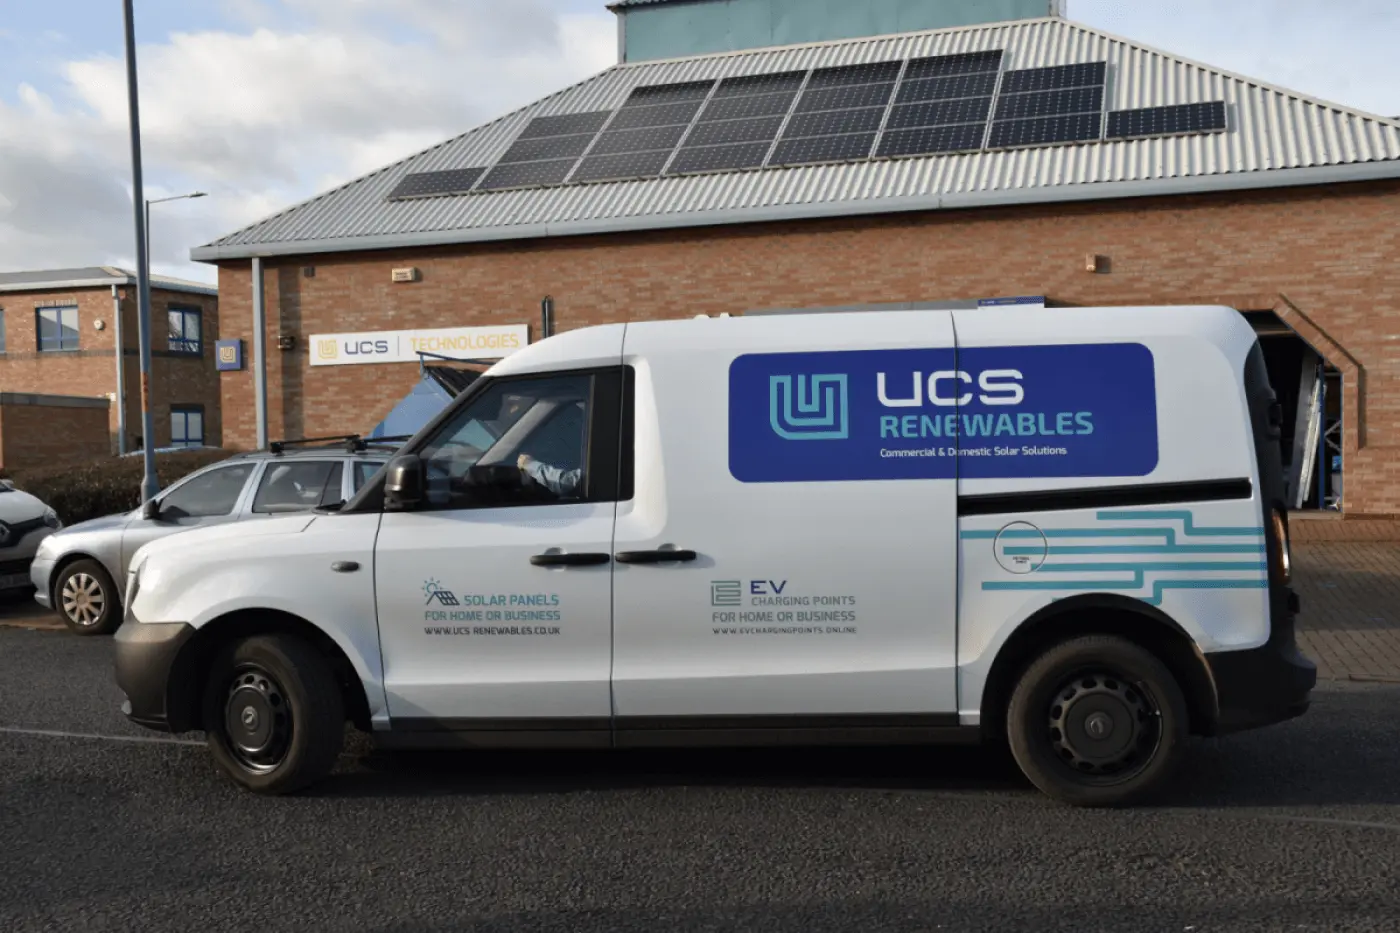 Vans’ Hybrid Solution for UCS Technologies 2